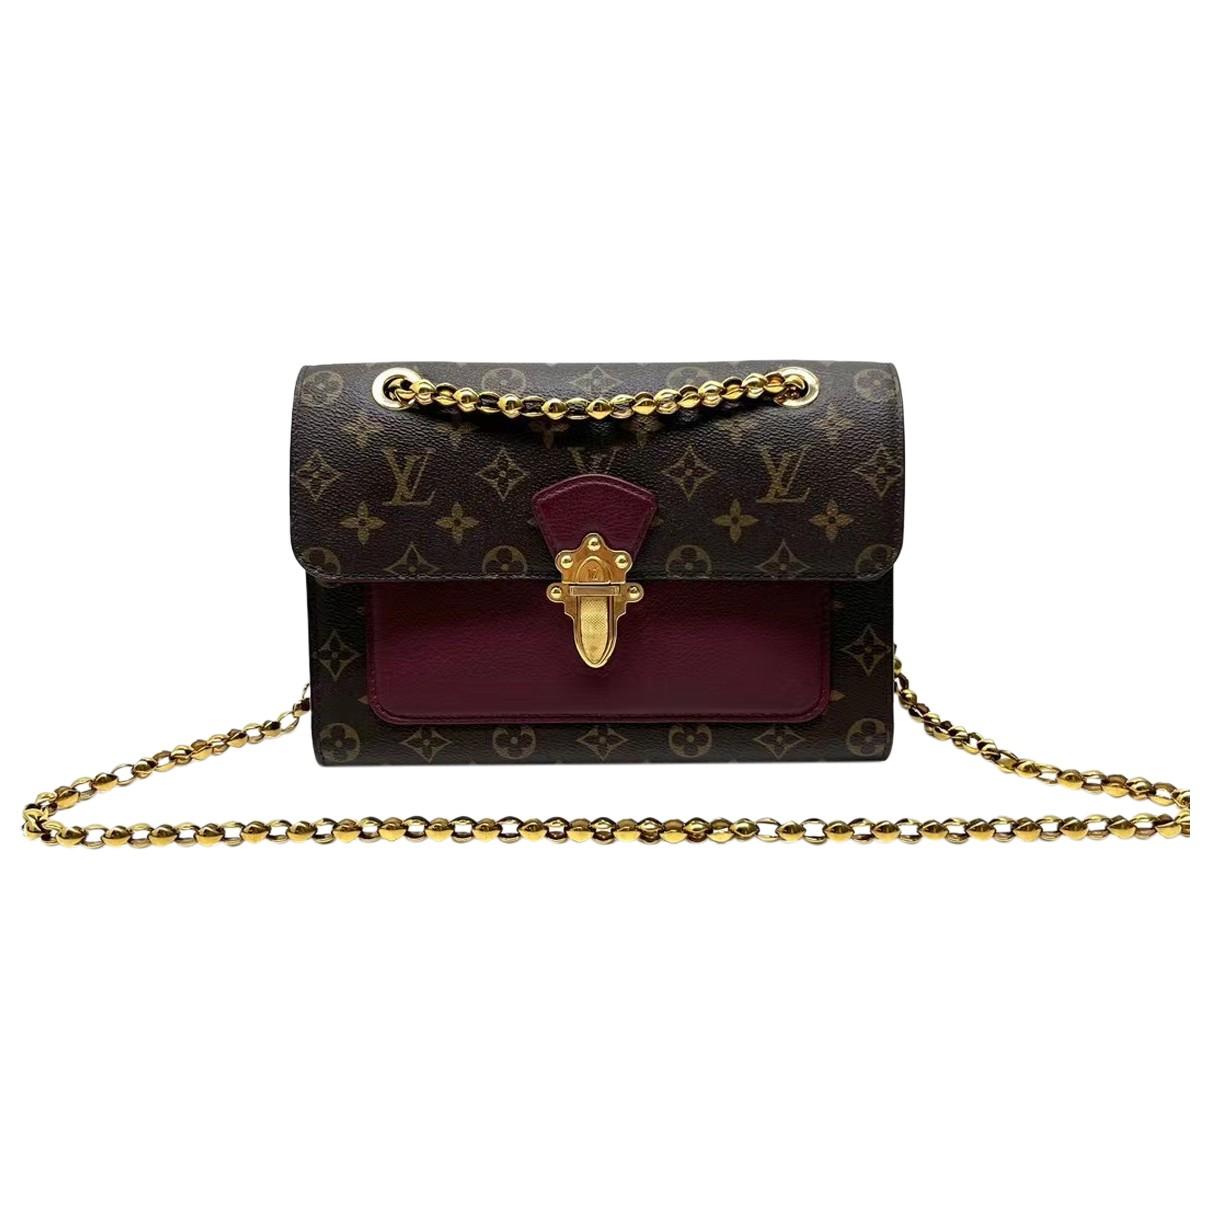 Victoire leather handbag